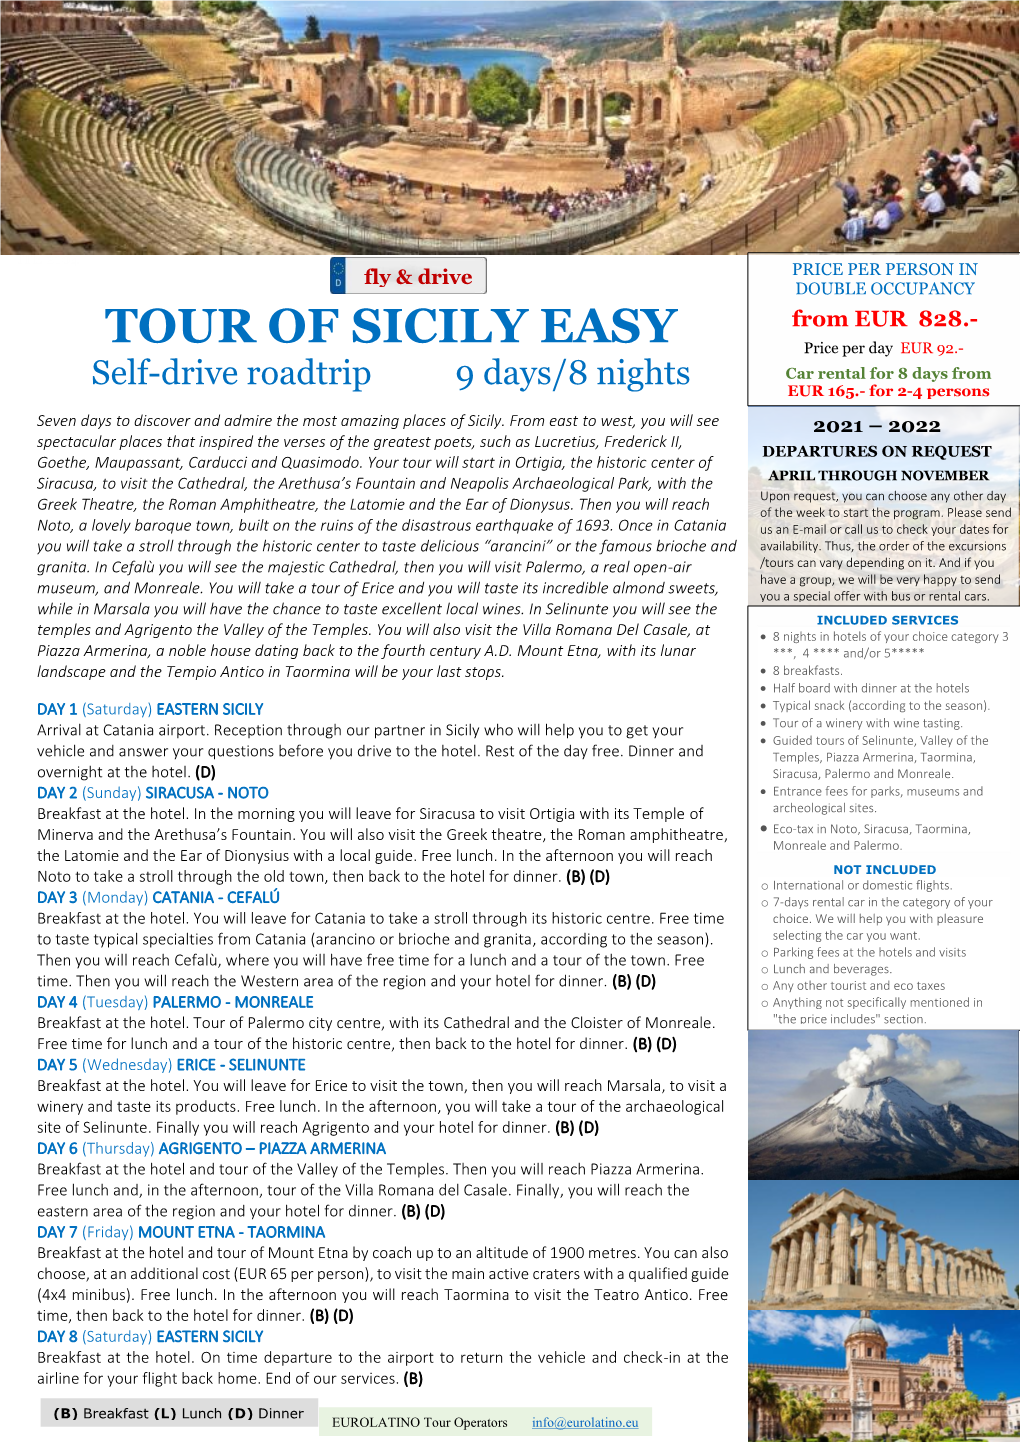 TOUR of SICILY EASY Price Per Day EUR 92